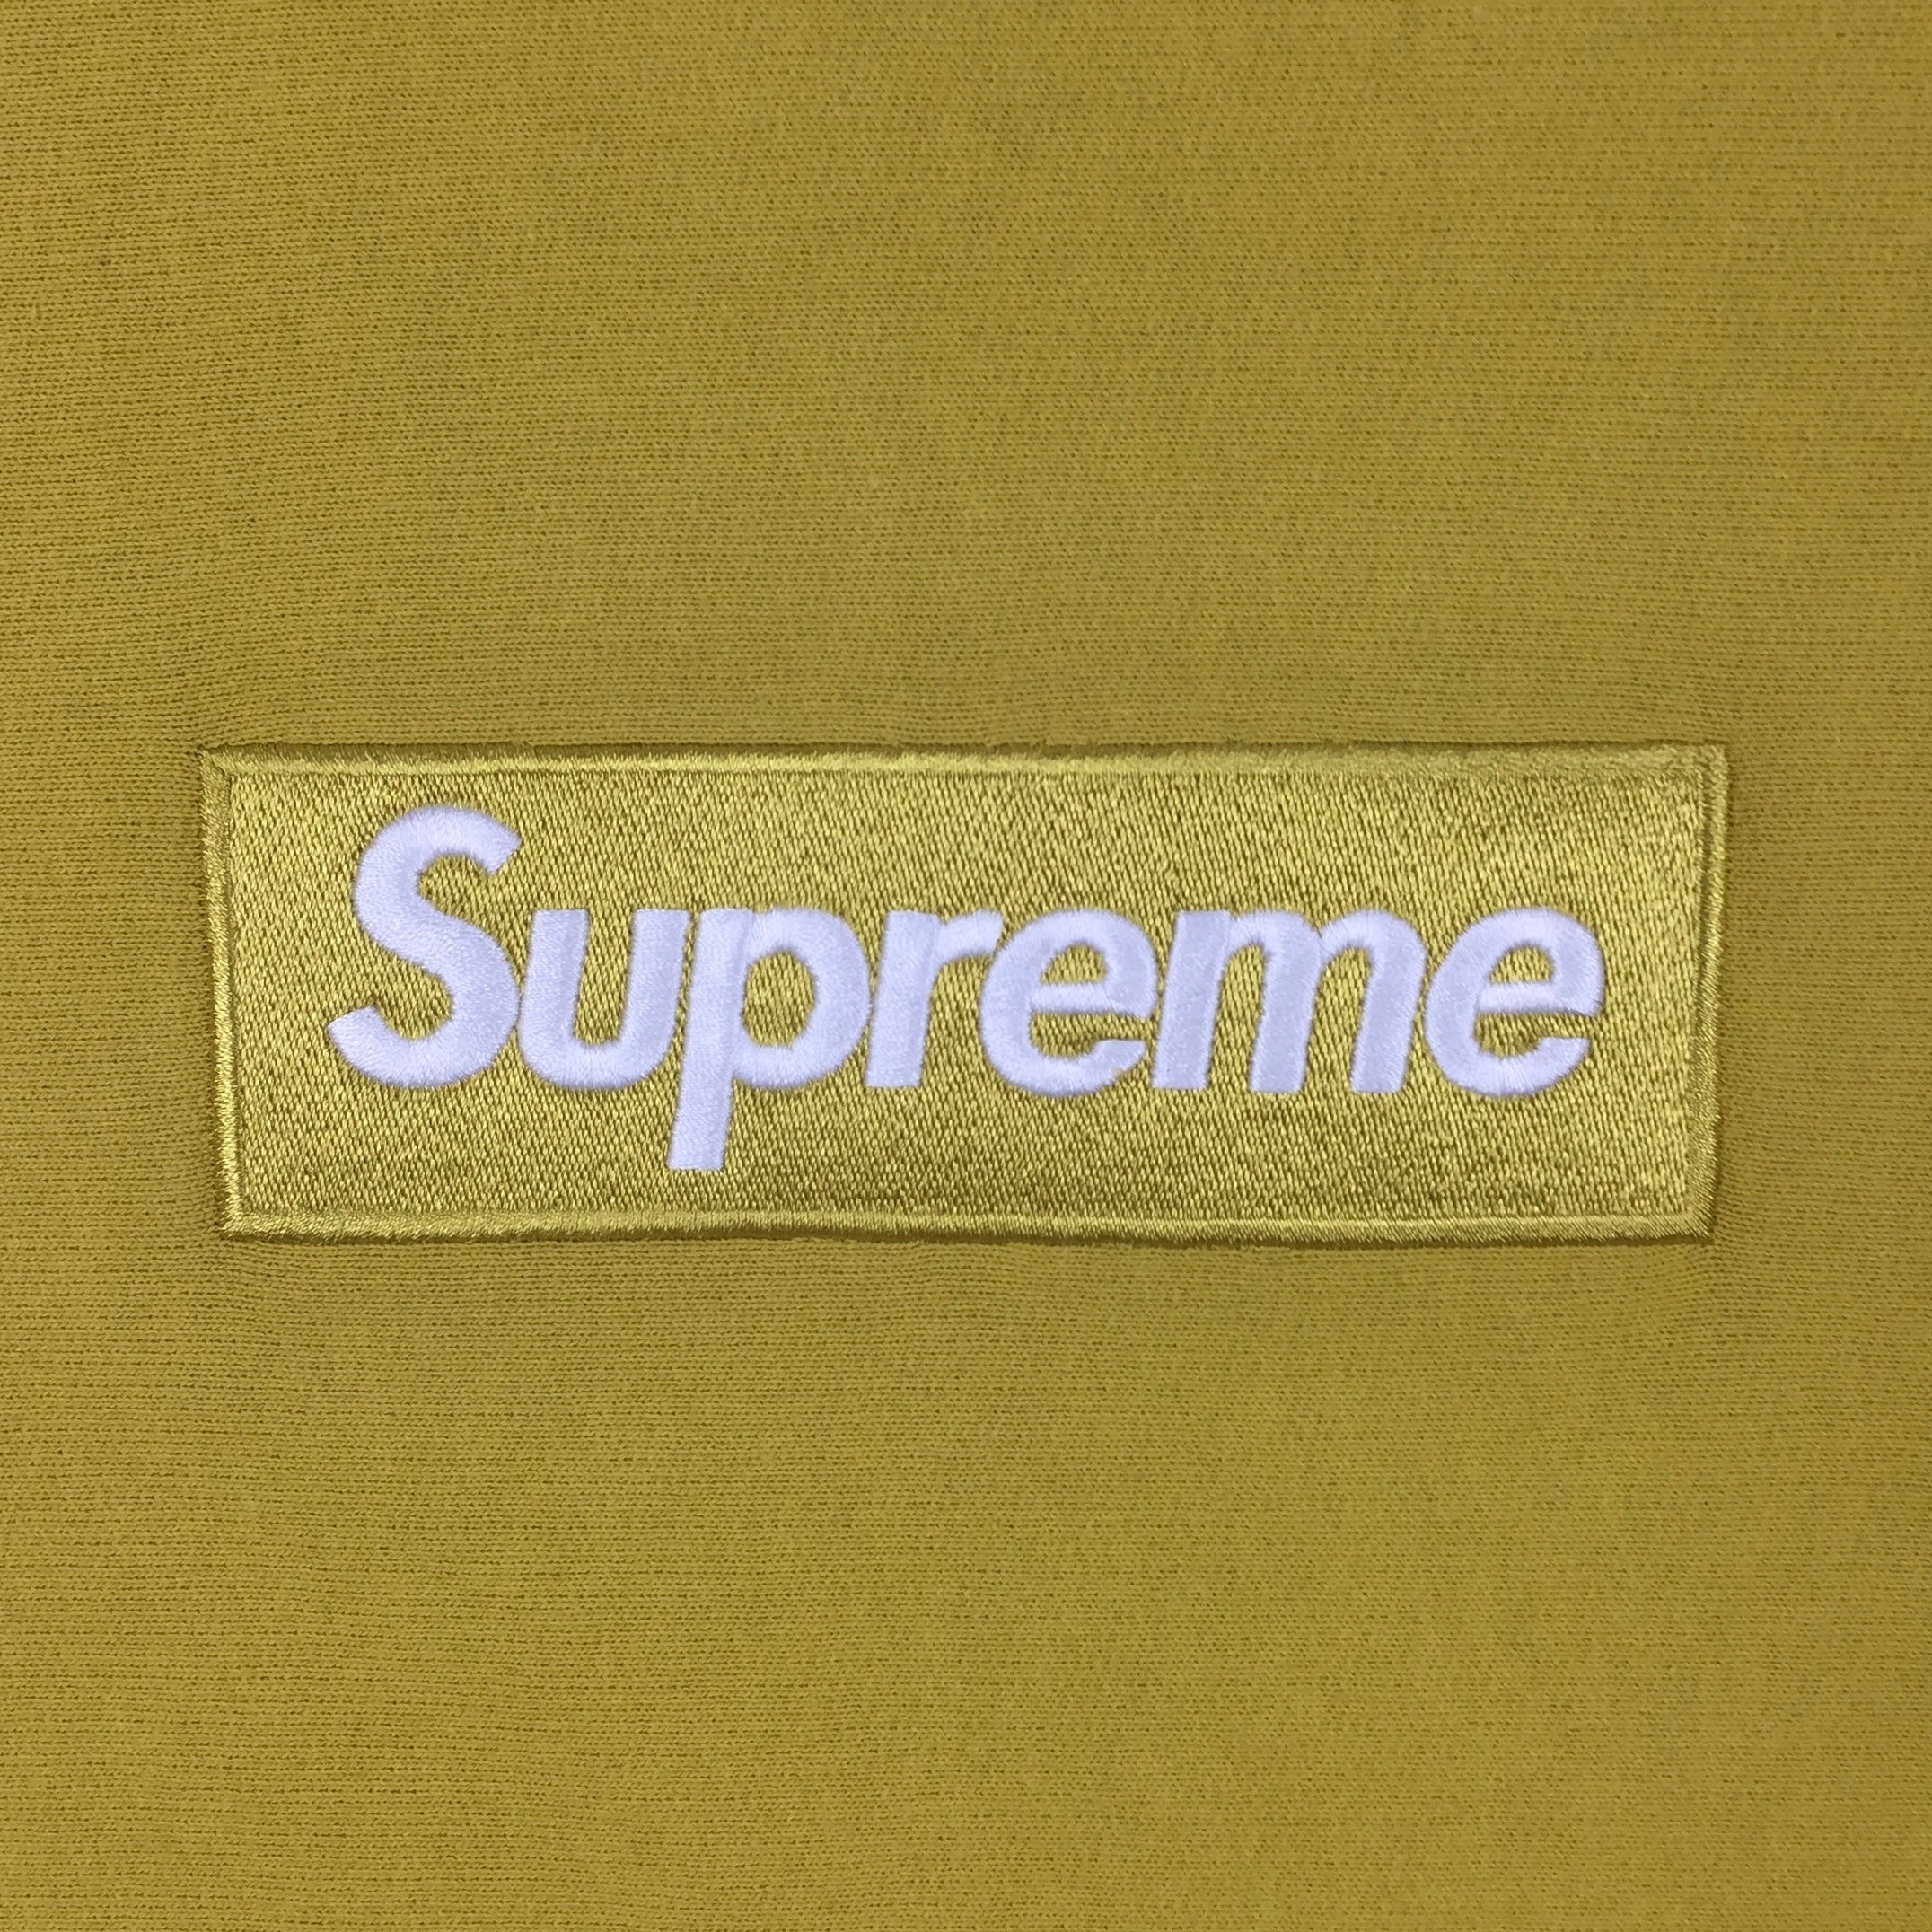 2018 Supreme Mustard Box Logo Crewneck